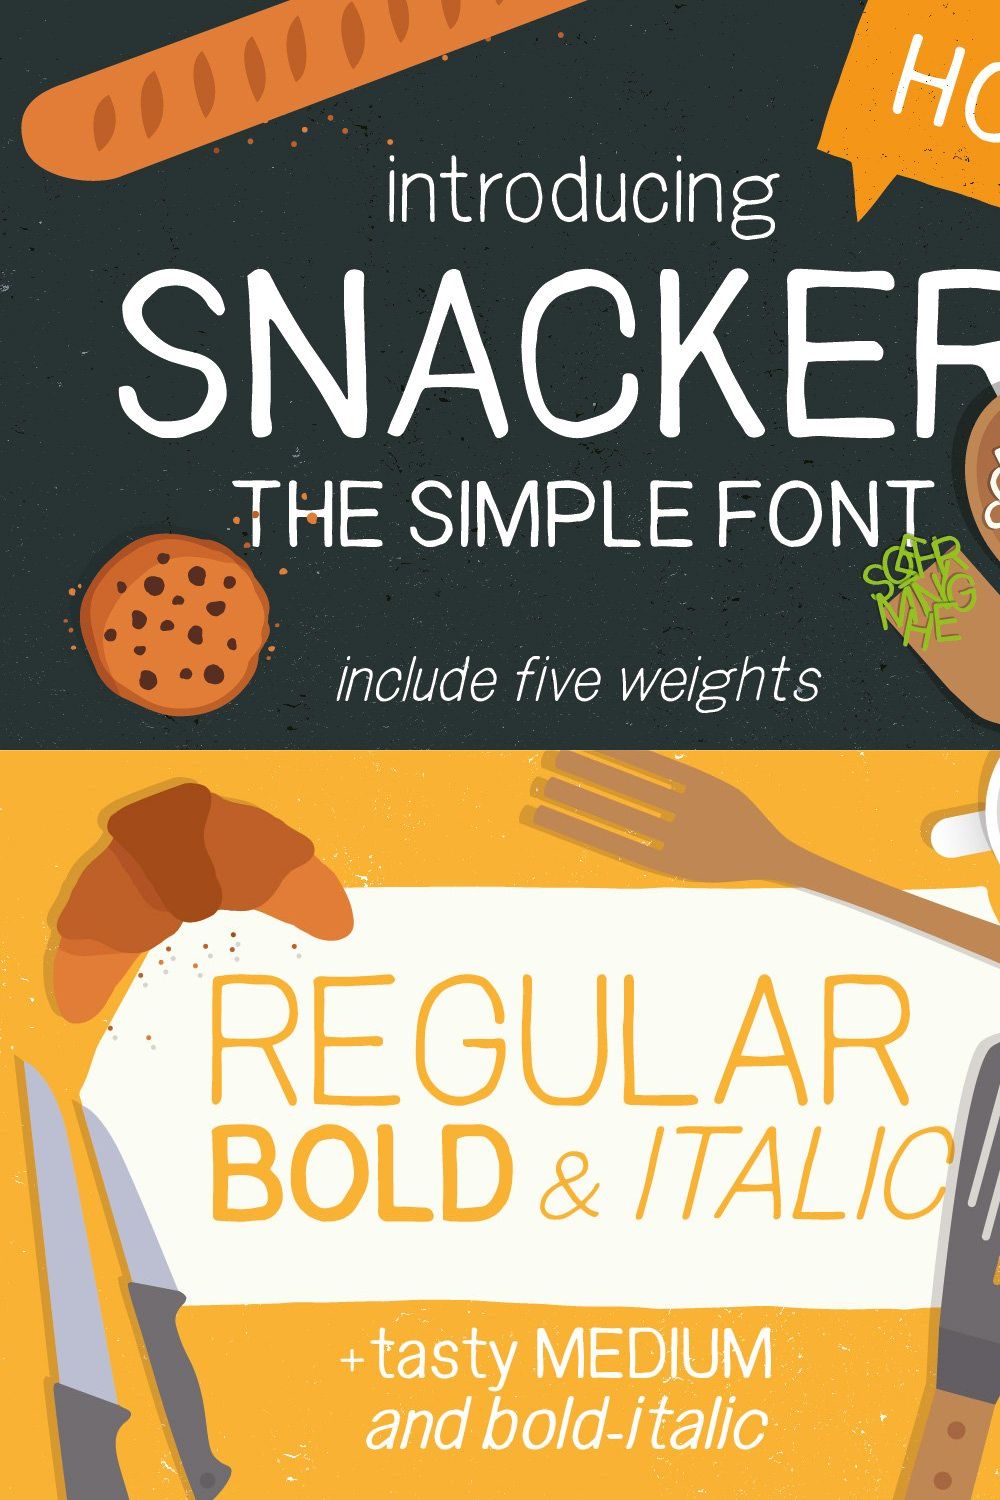 Snacker - sans serif font pinterest preview image.